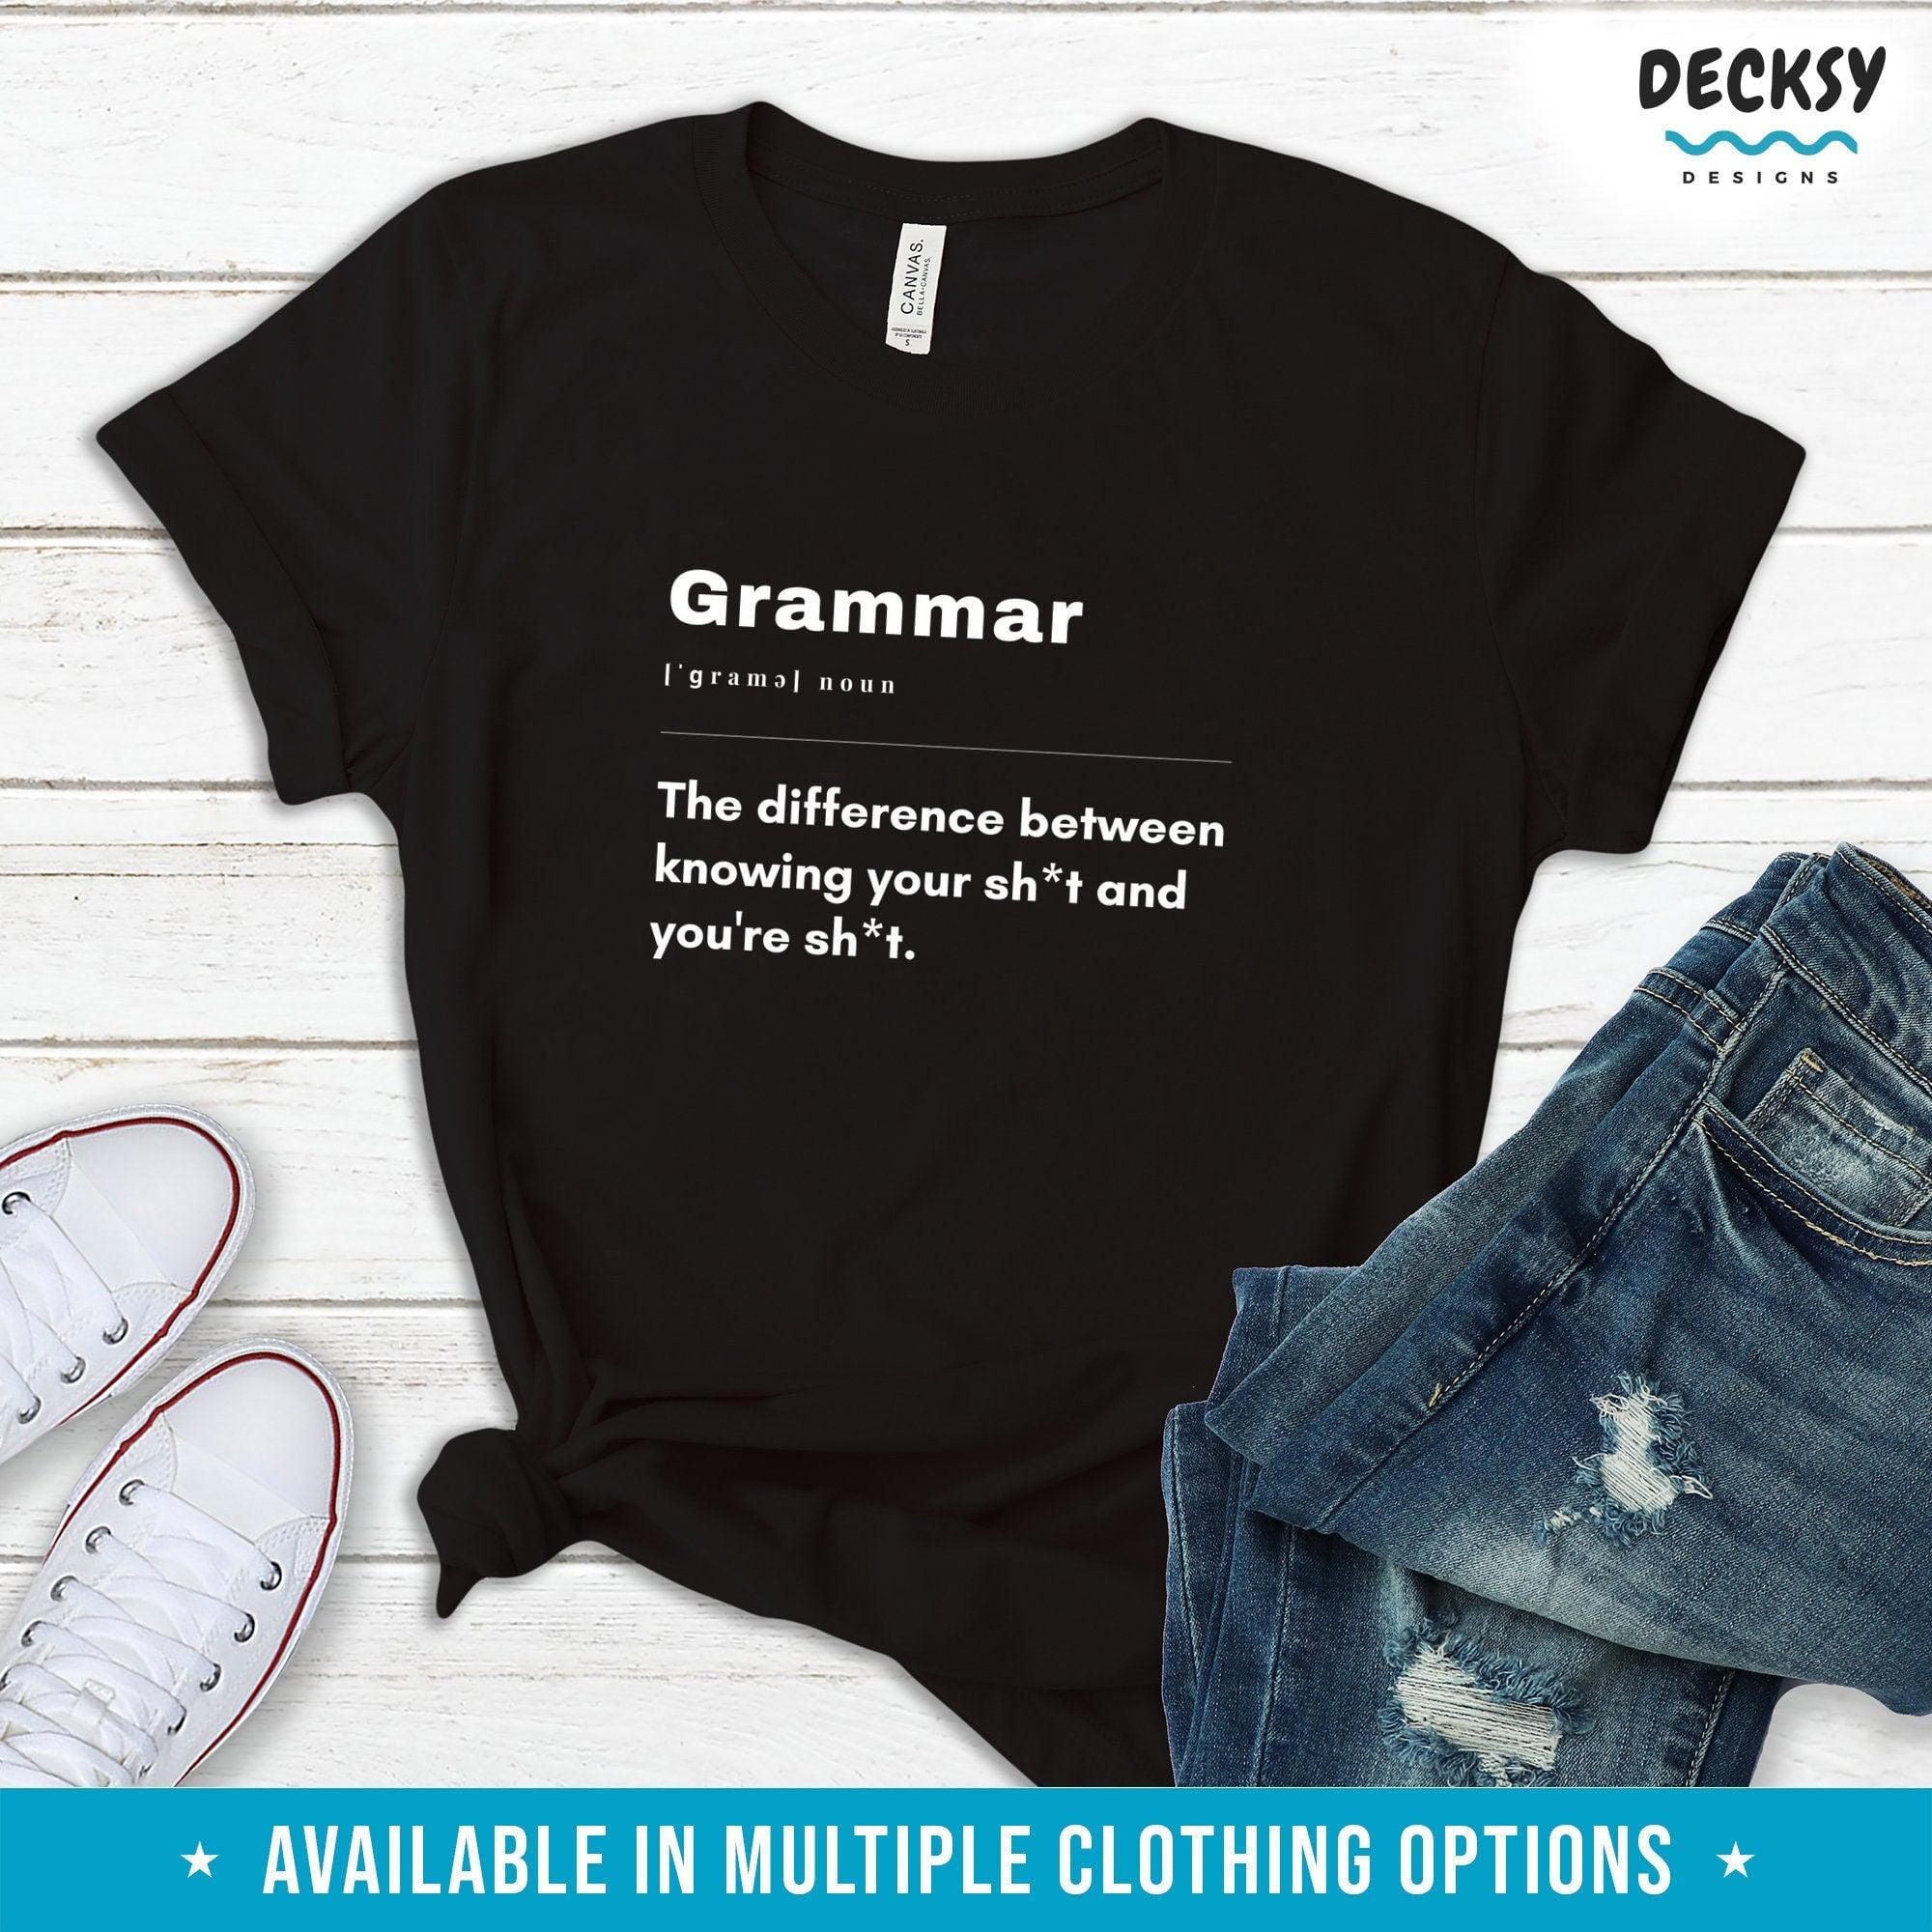 Grammar Shirt, English Teacher Gift-Clothing:Gender-Neutral Adult Clothing:Tops & Tees:T-shirts:Graphic Tees-DecksyDesigns